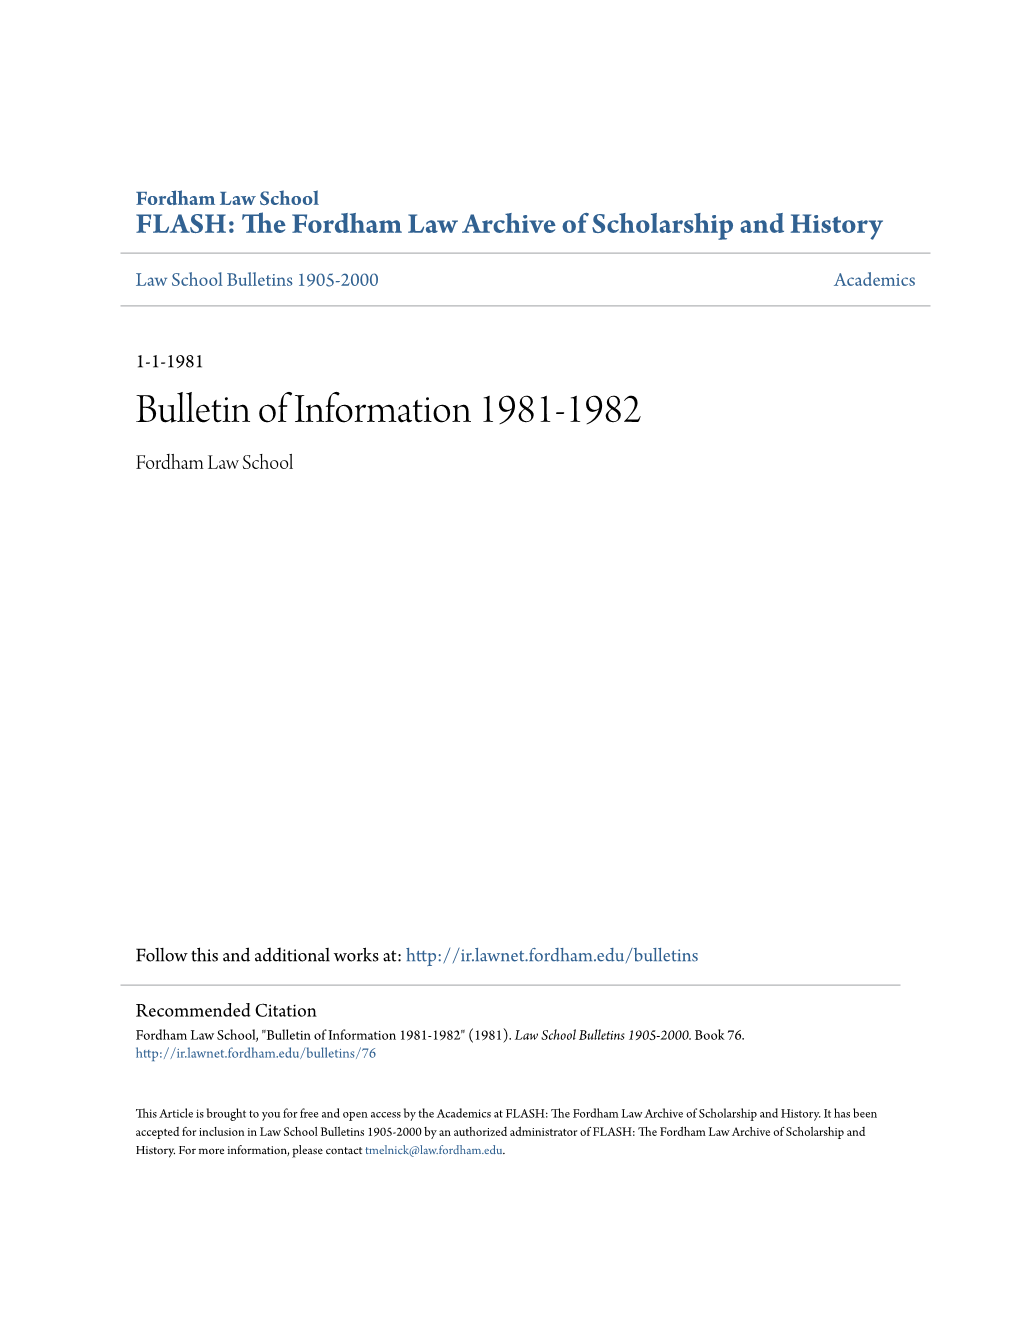 Bulletin of Information 1981-1982 Fordham Law School